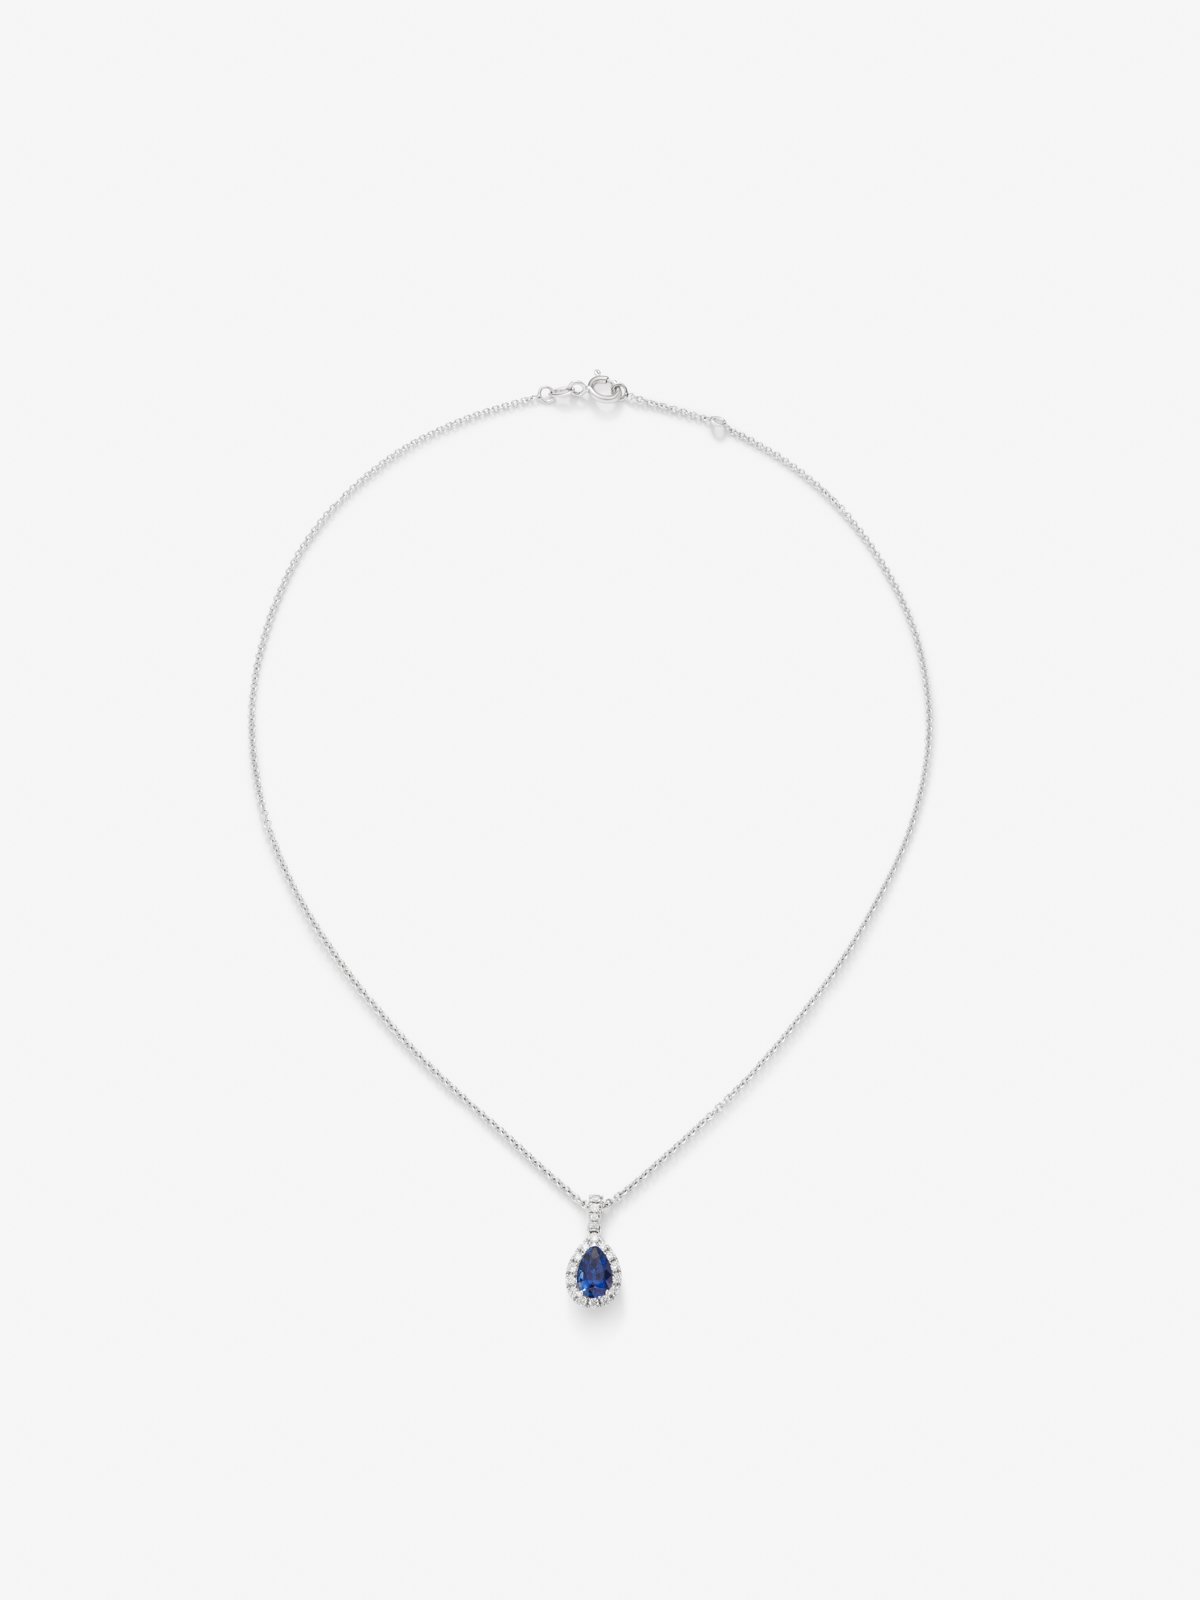 18K white gold pendant with blue sapphir